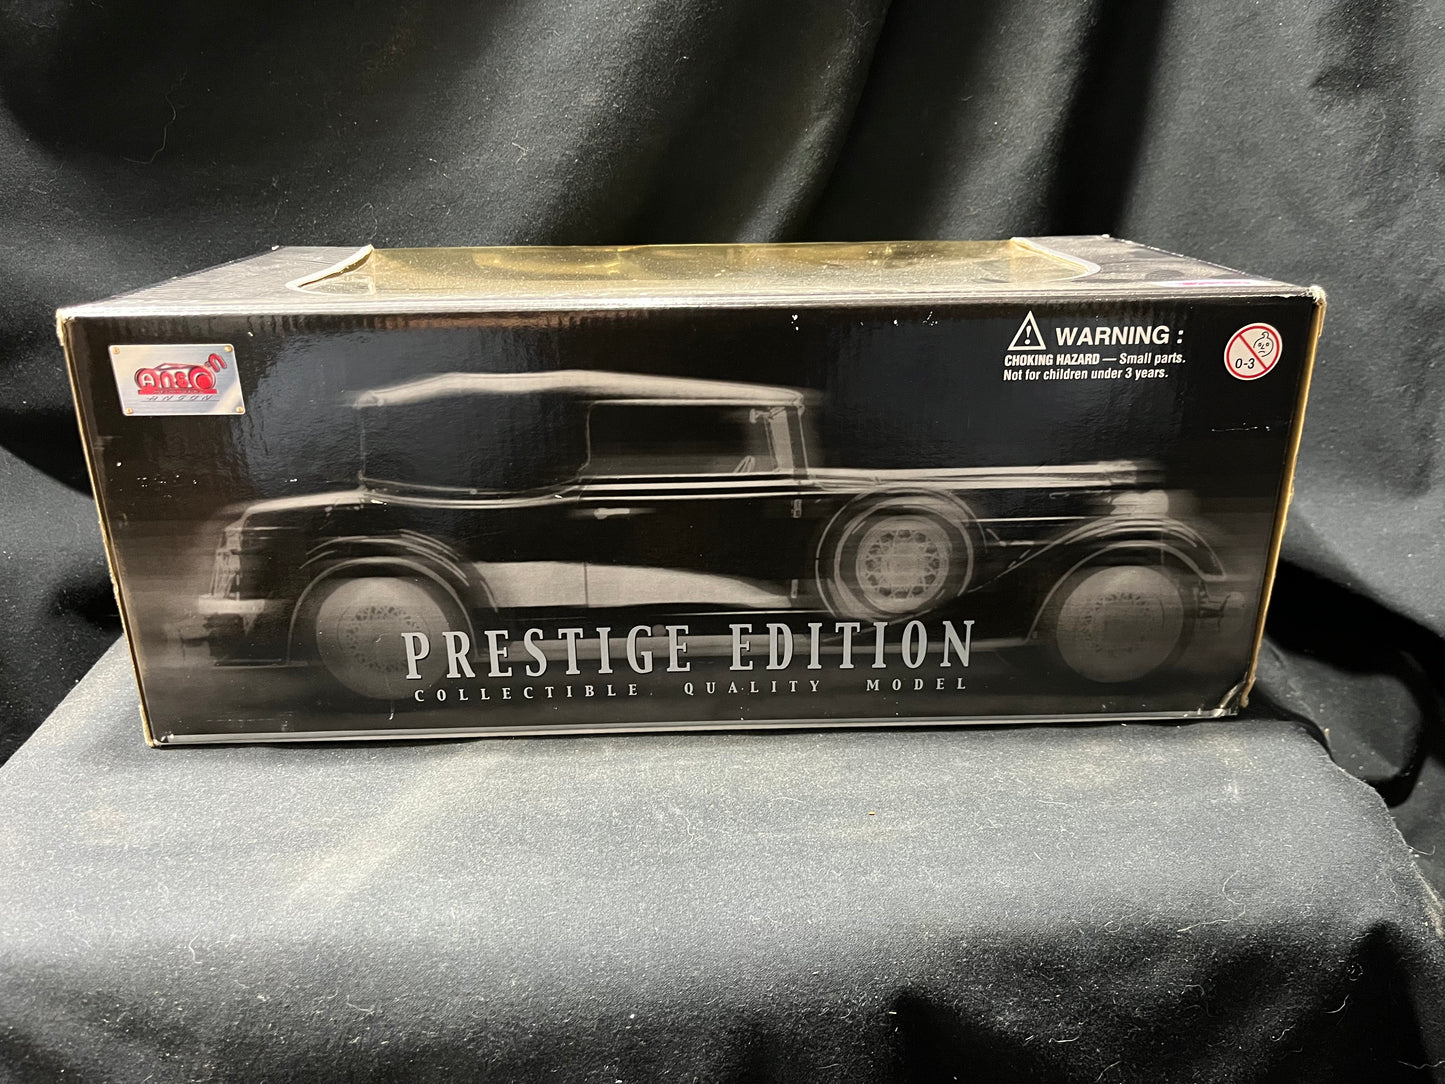 Prestige Edition 1/18 Scale 1931 Peerless Model Car Anson Metal Series